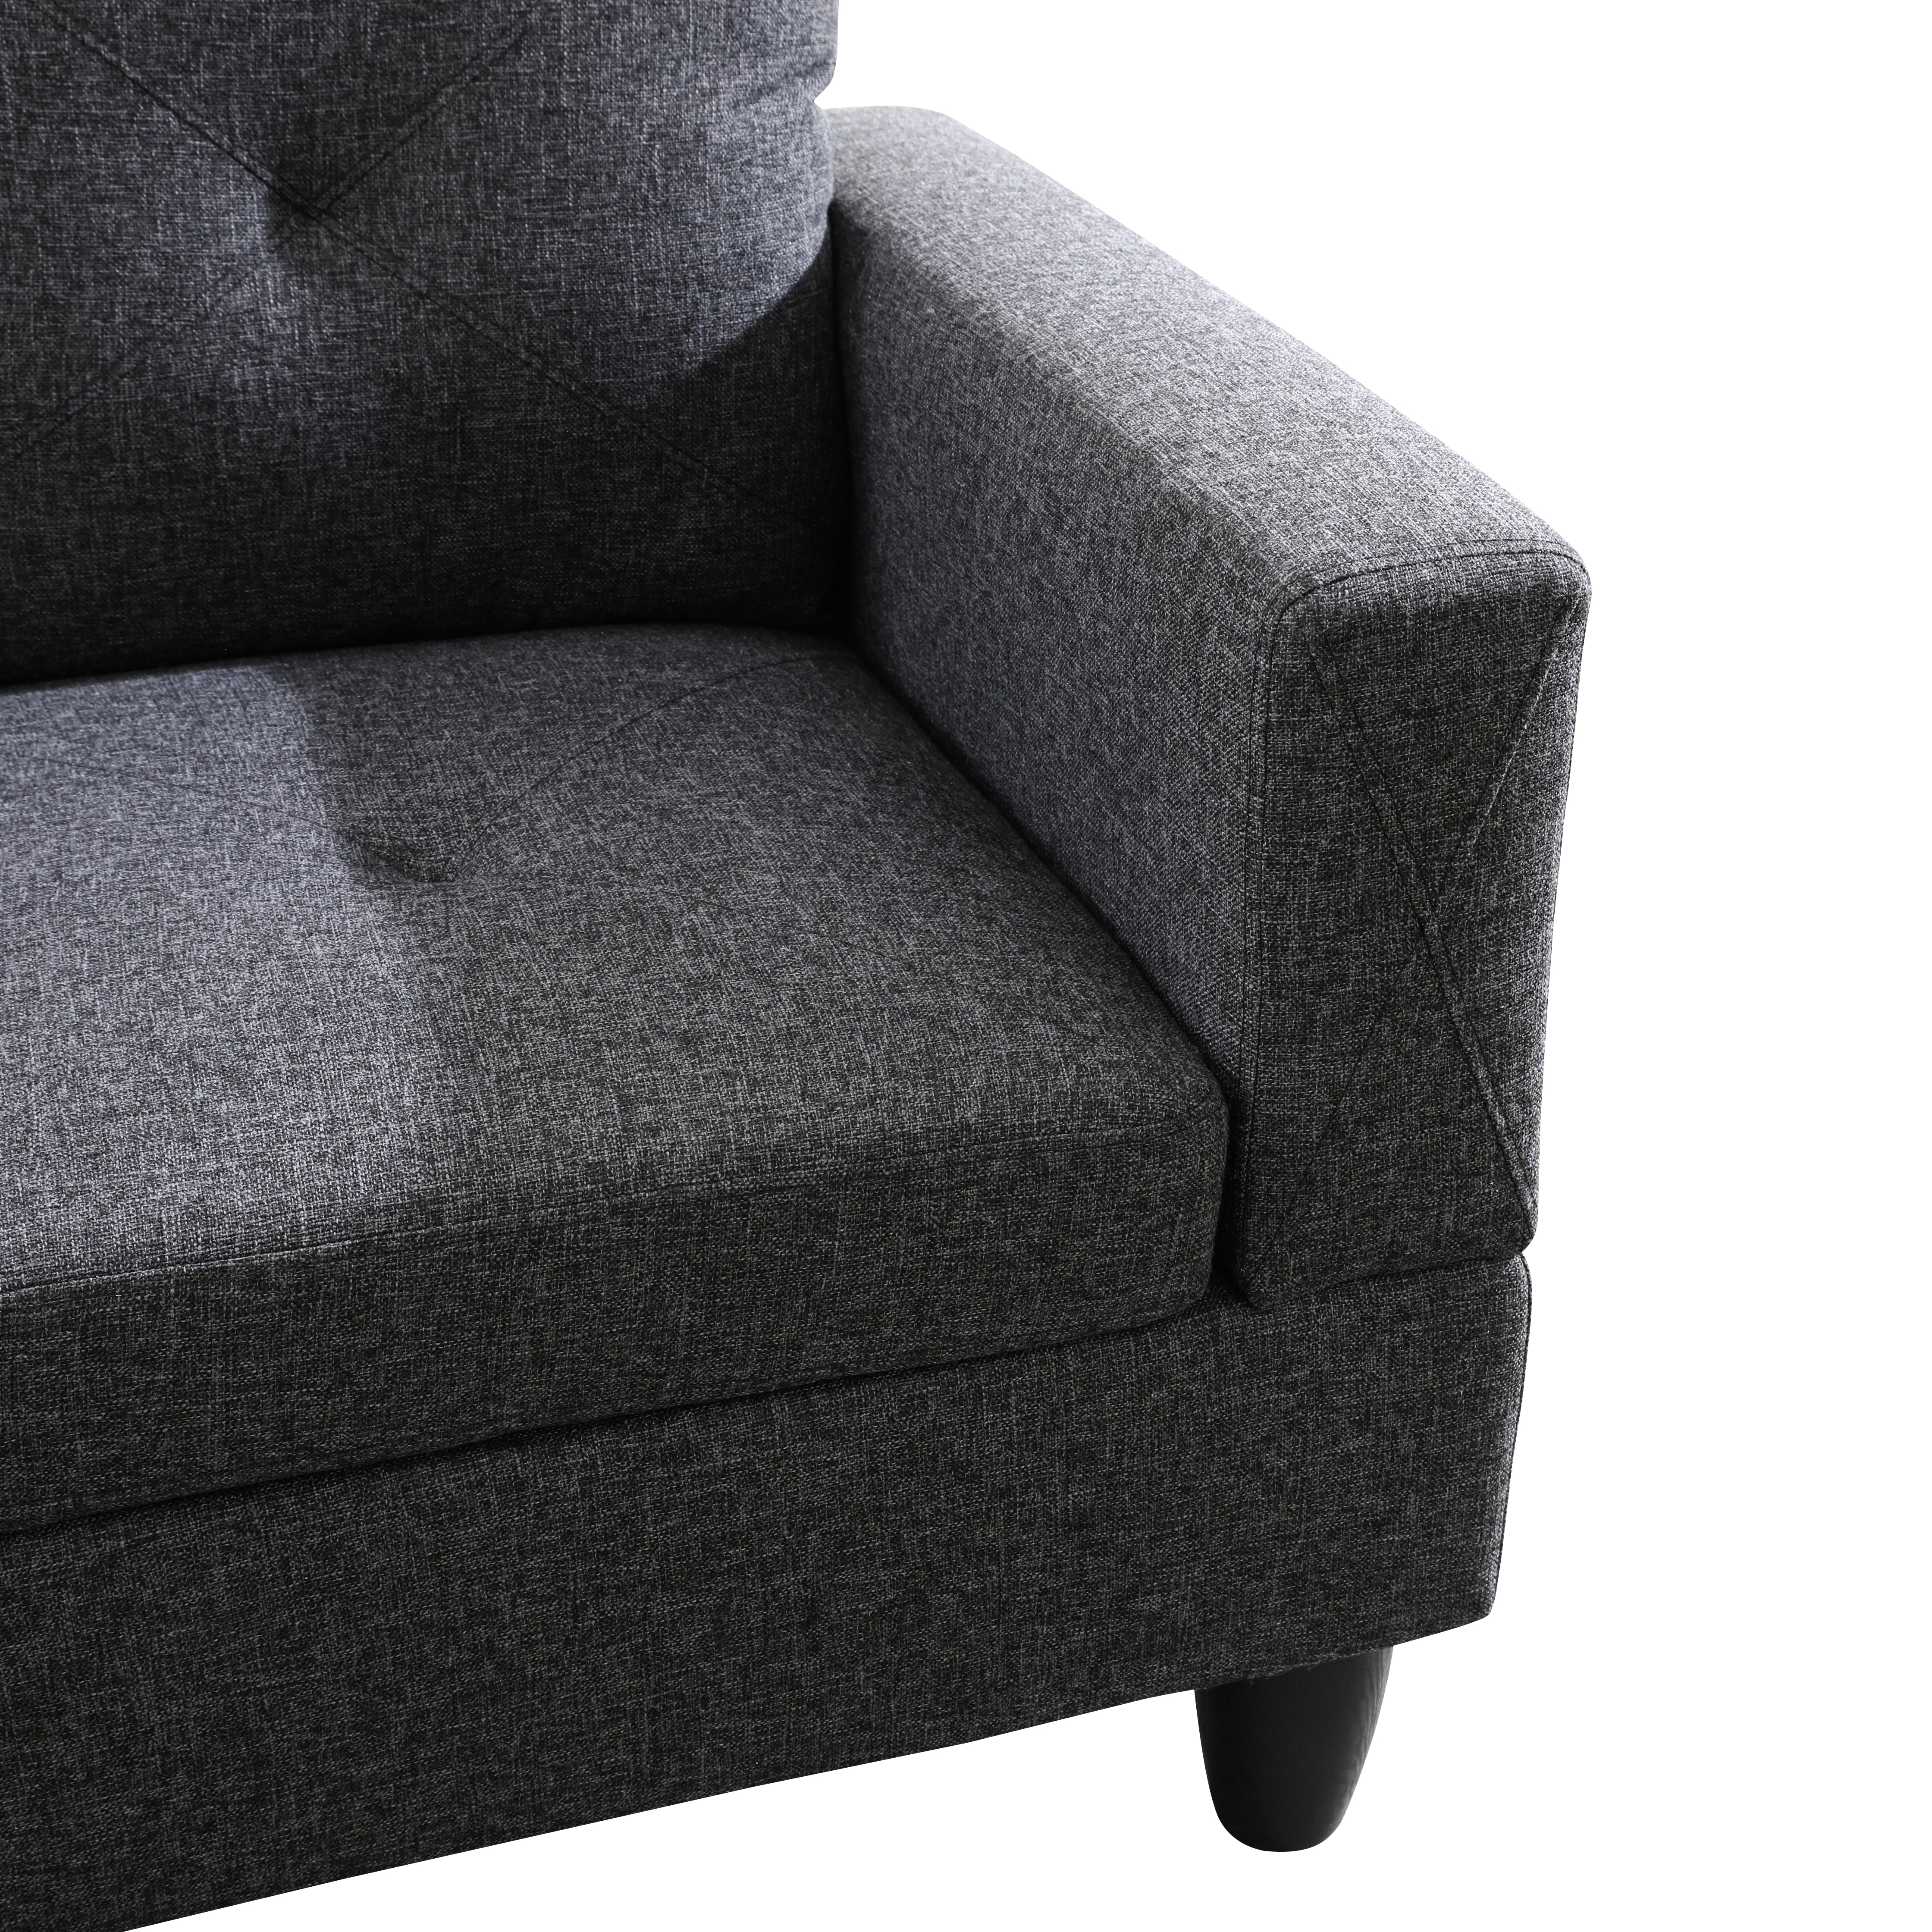 Ainehome Black Grey L-Shaped Linen Sofa Set